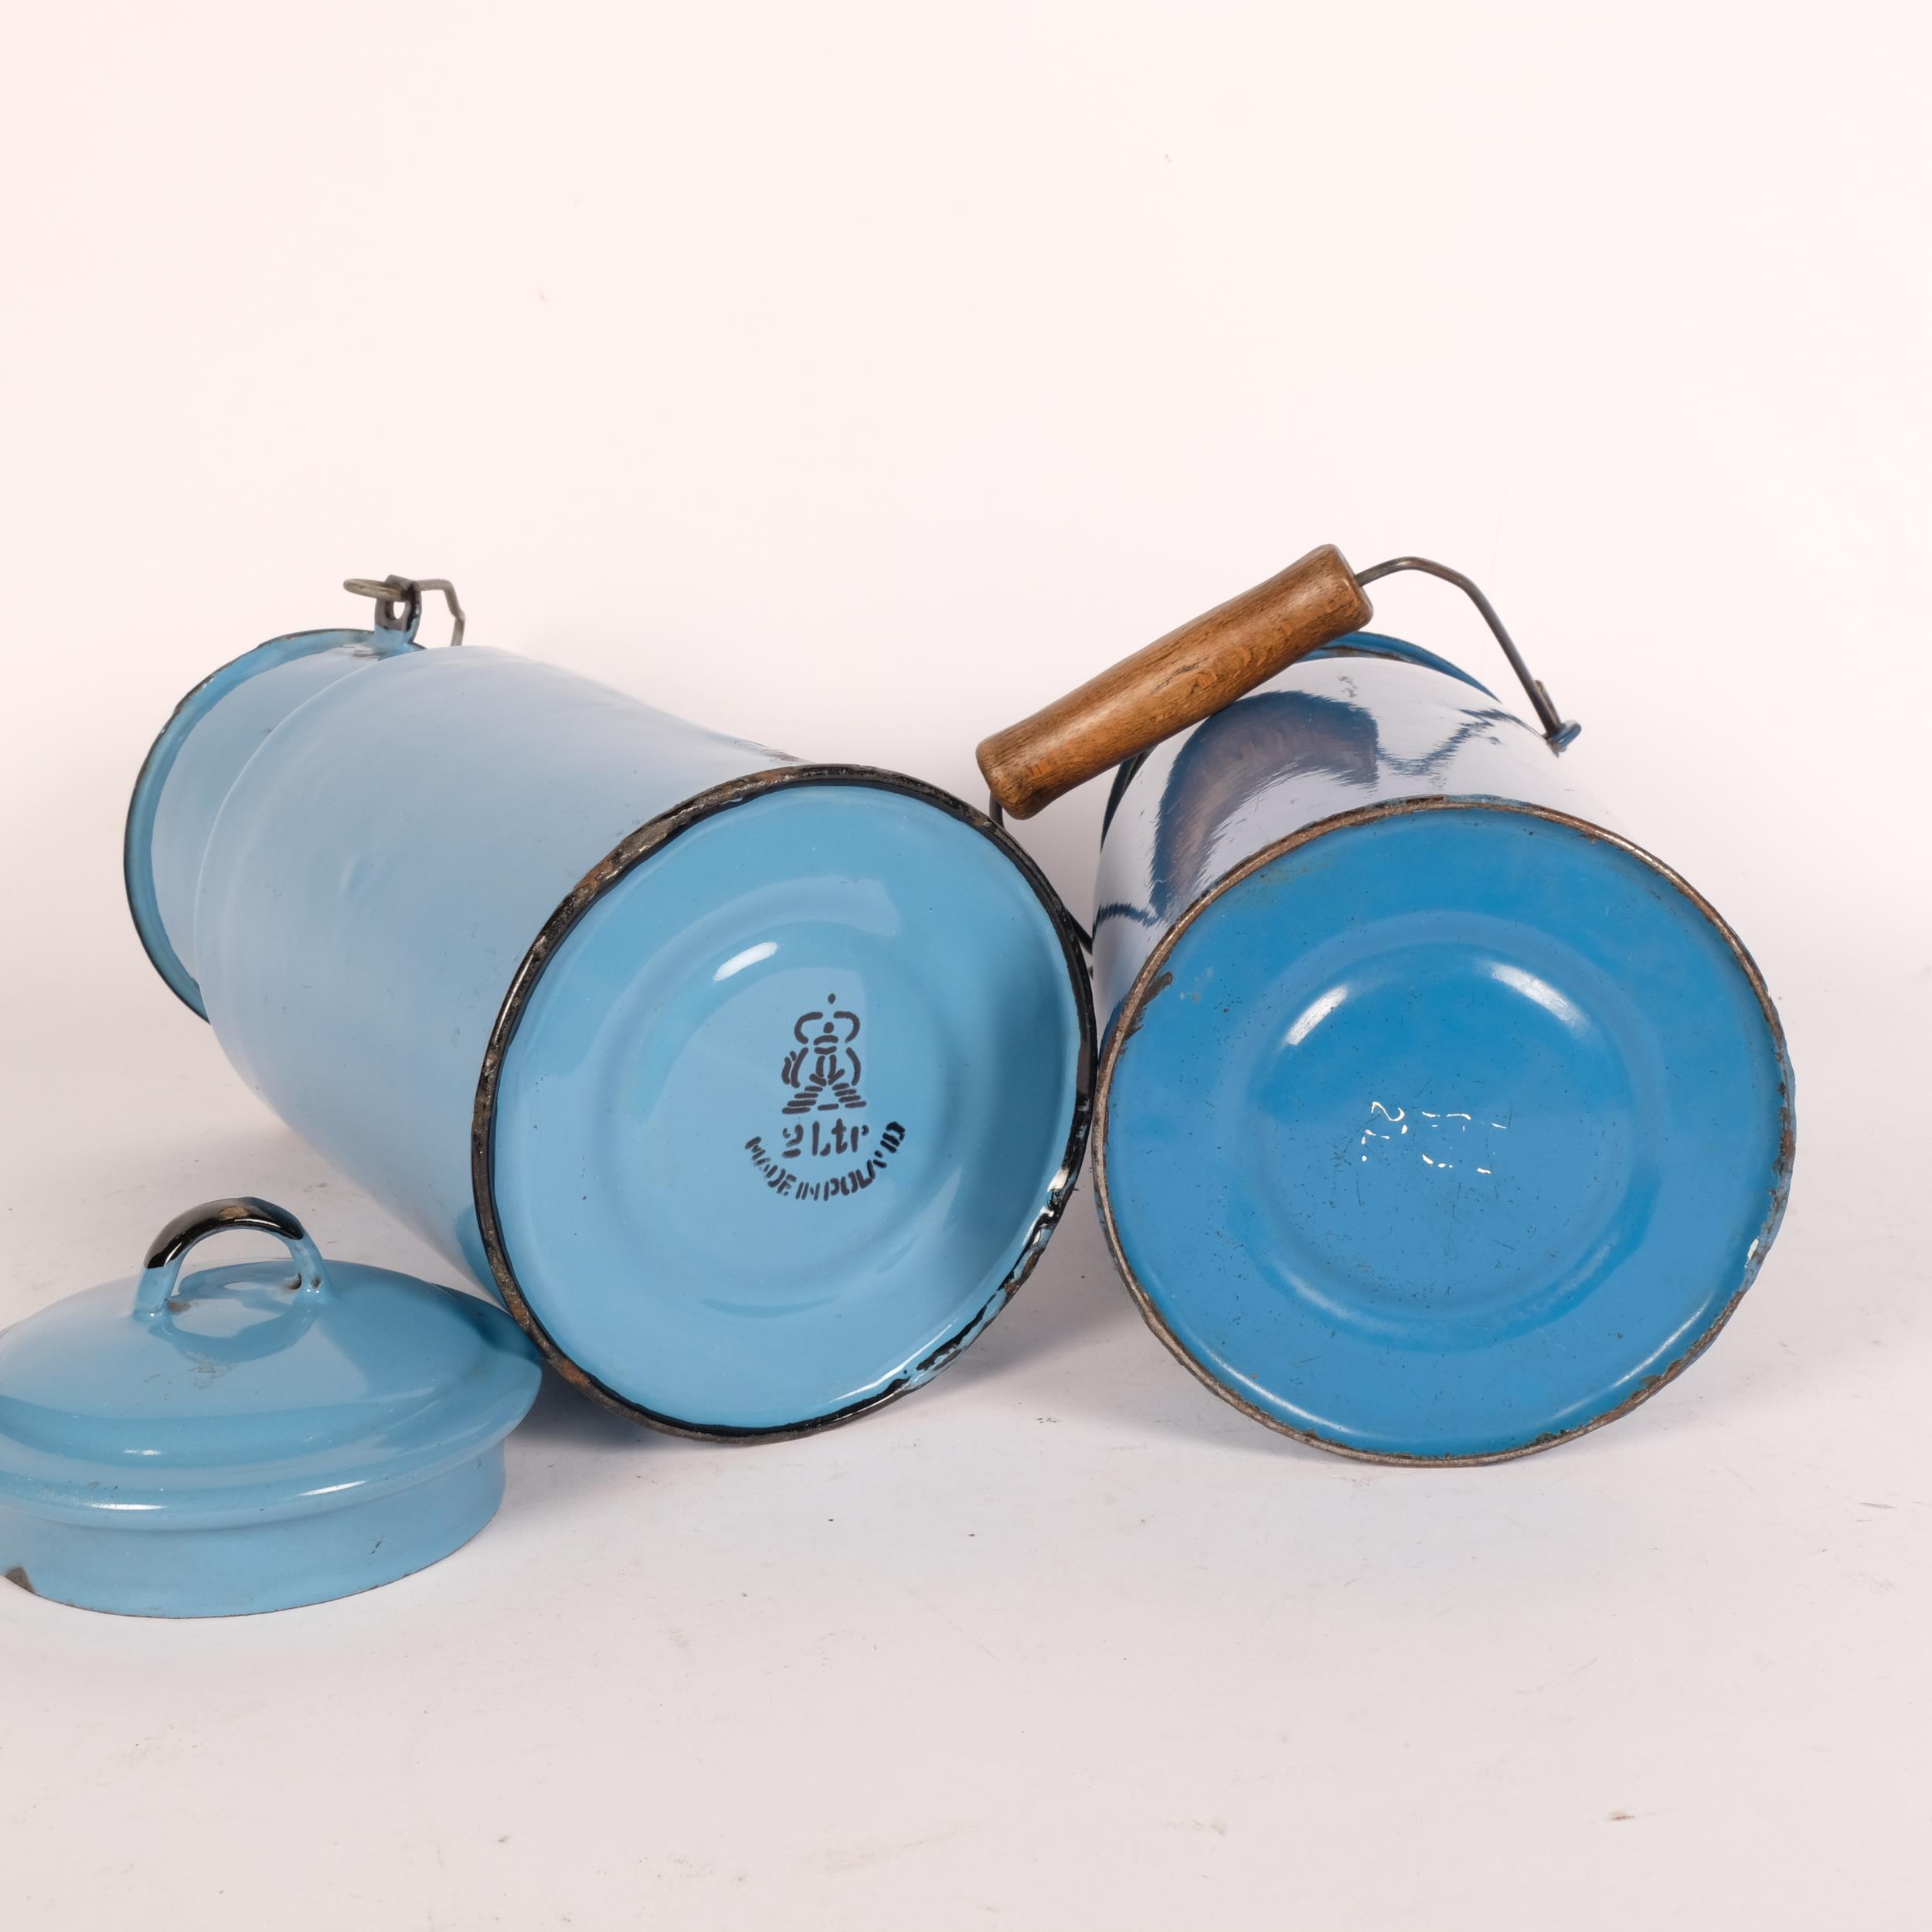 A Polish blue enamel billy can with swing handle, 28.5cm, and a similar enamel can - Bild 2 aus 2